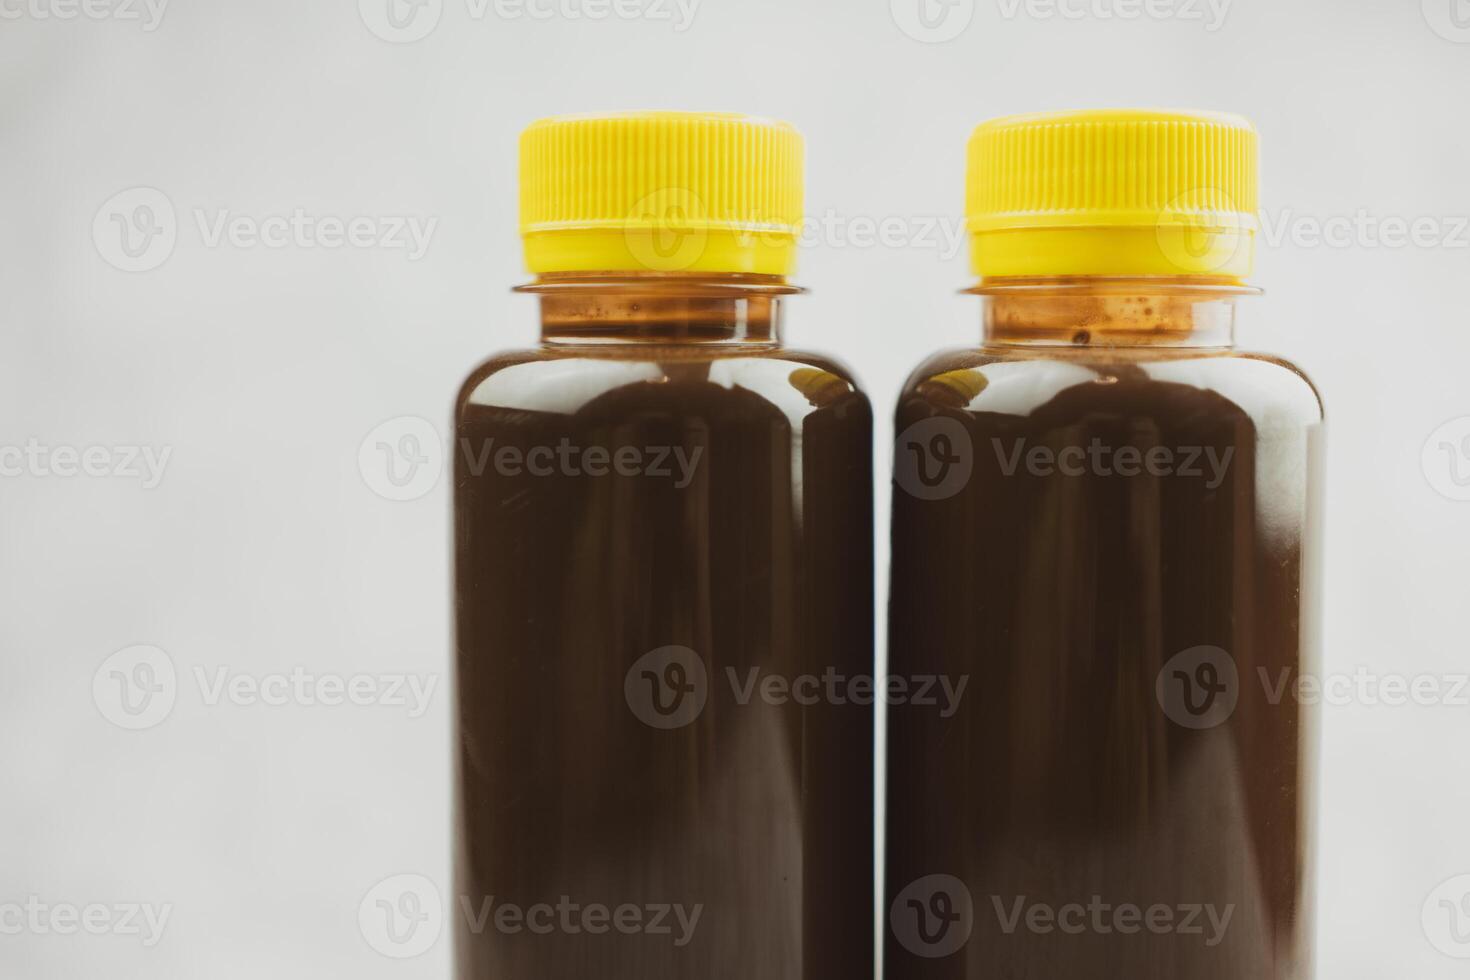 transparente botella de chocolate Leche o cacao Leche en transparente botella con amarillo tapa. foto